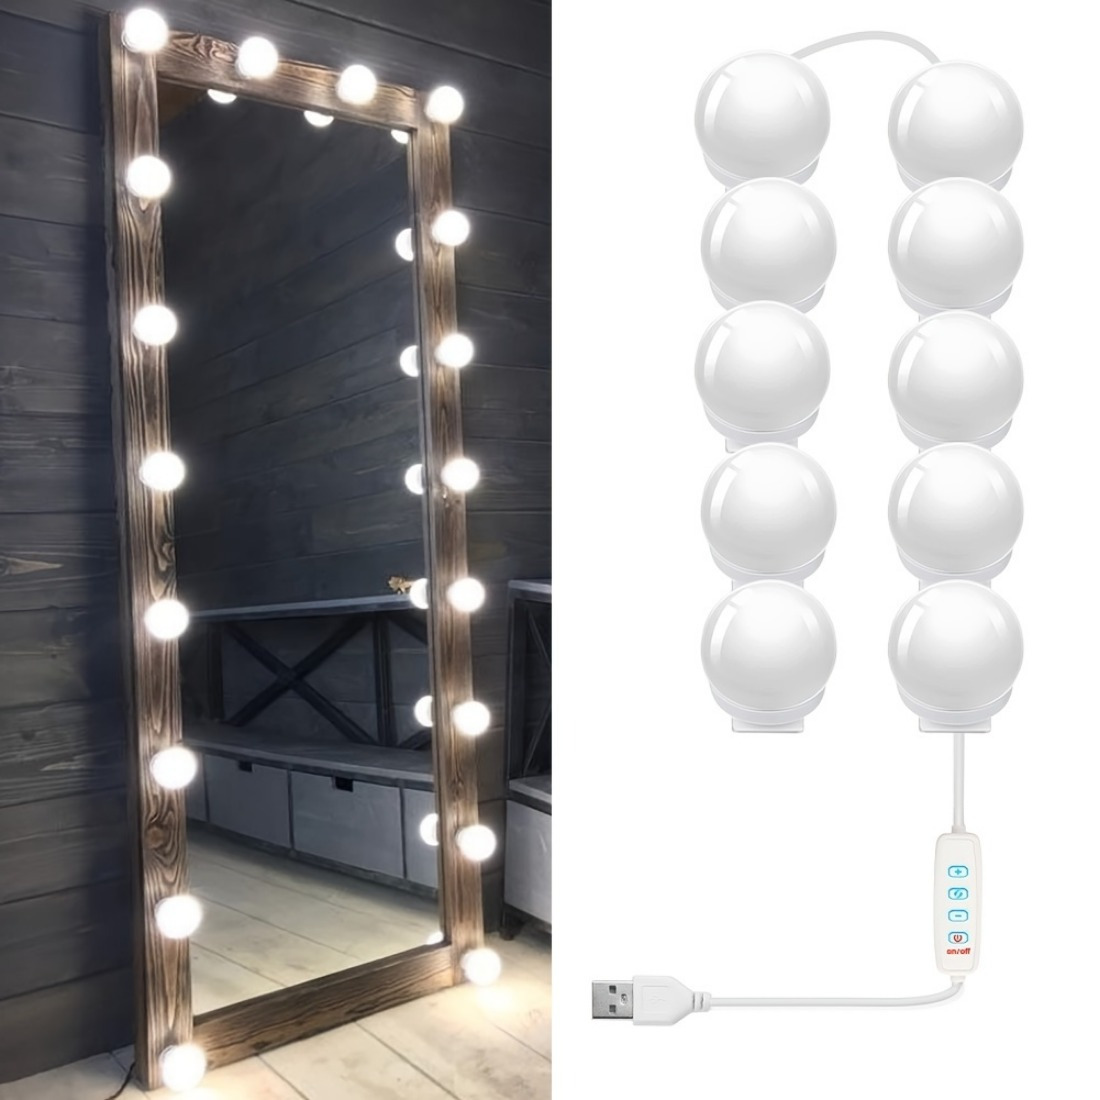 Comprar Kit de luces LED para maquillaje, bombillas de espejo regulables  por USB, luces de iluminación de tocador para tocador de pared y baño,  4/6/8/10